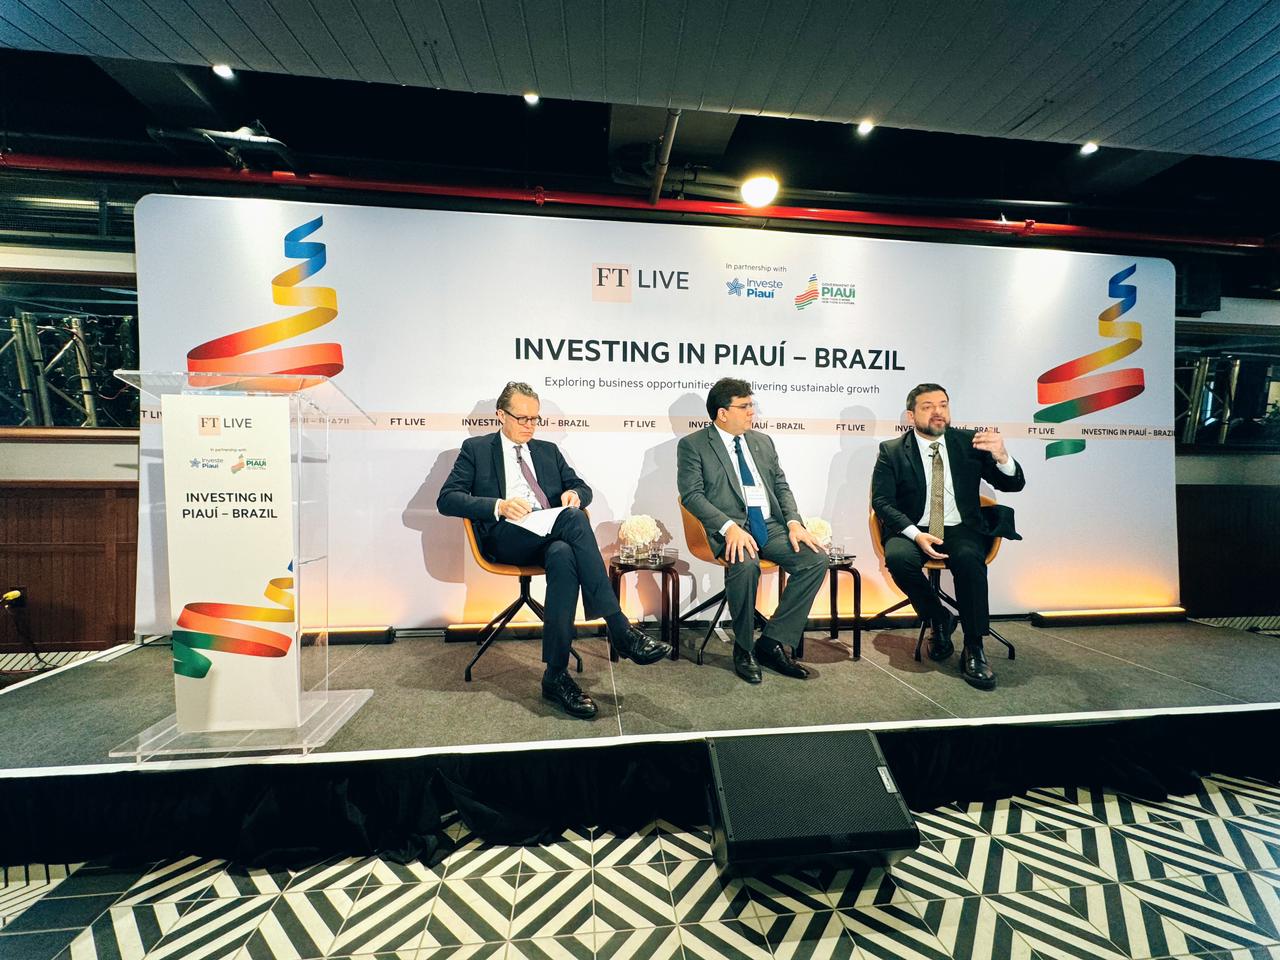 Investing in Piaui - Brazil2.jpg